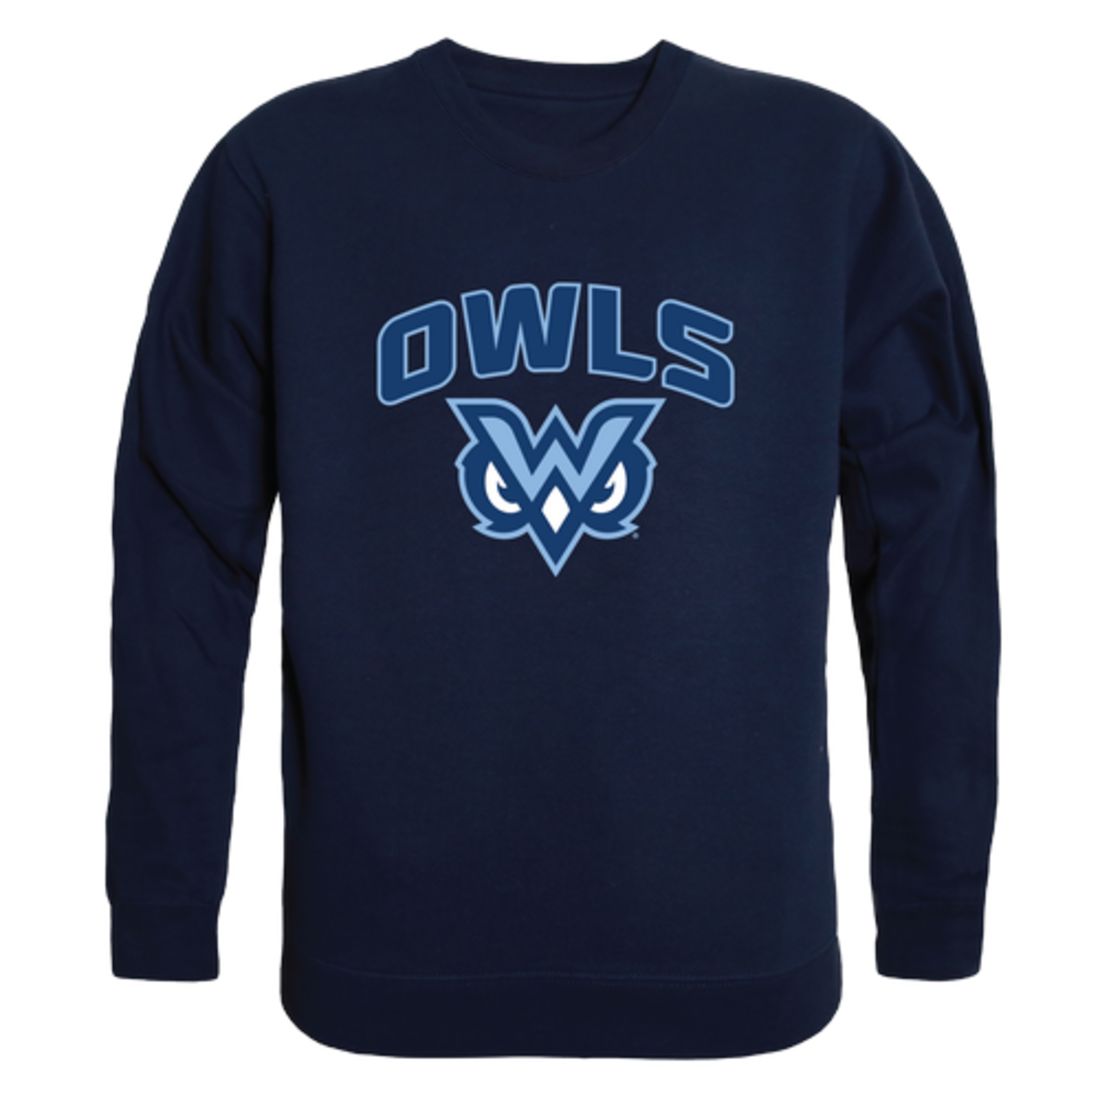 Mississippi University for Women The W Owls Campus Crewneck Sweatshirt